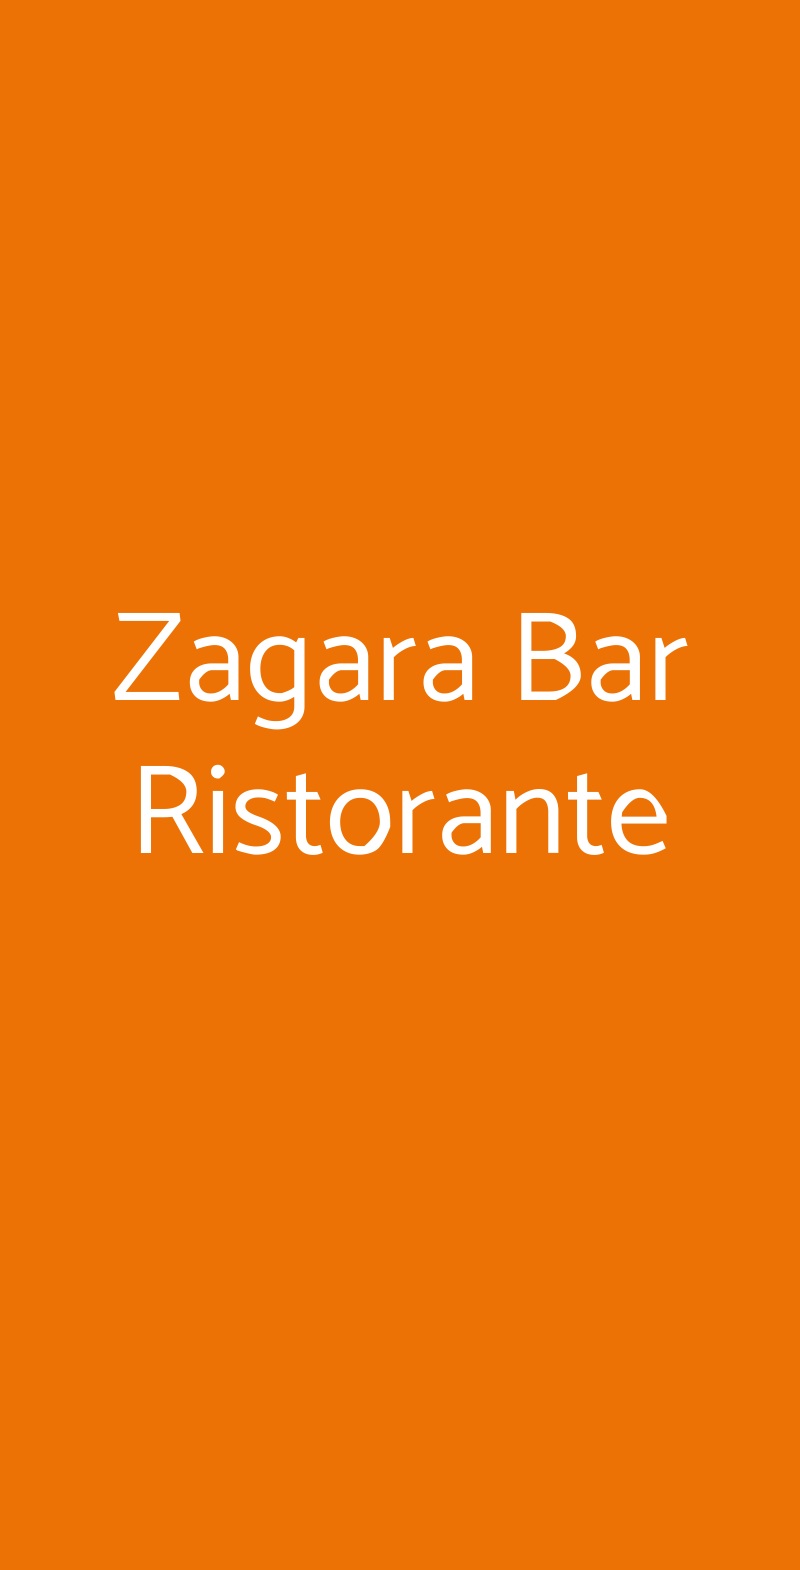 Zagara Bar Ristorante Milano menù 1 pagina